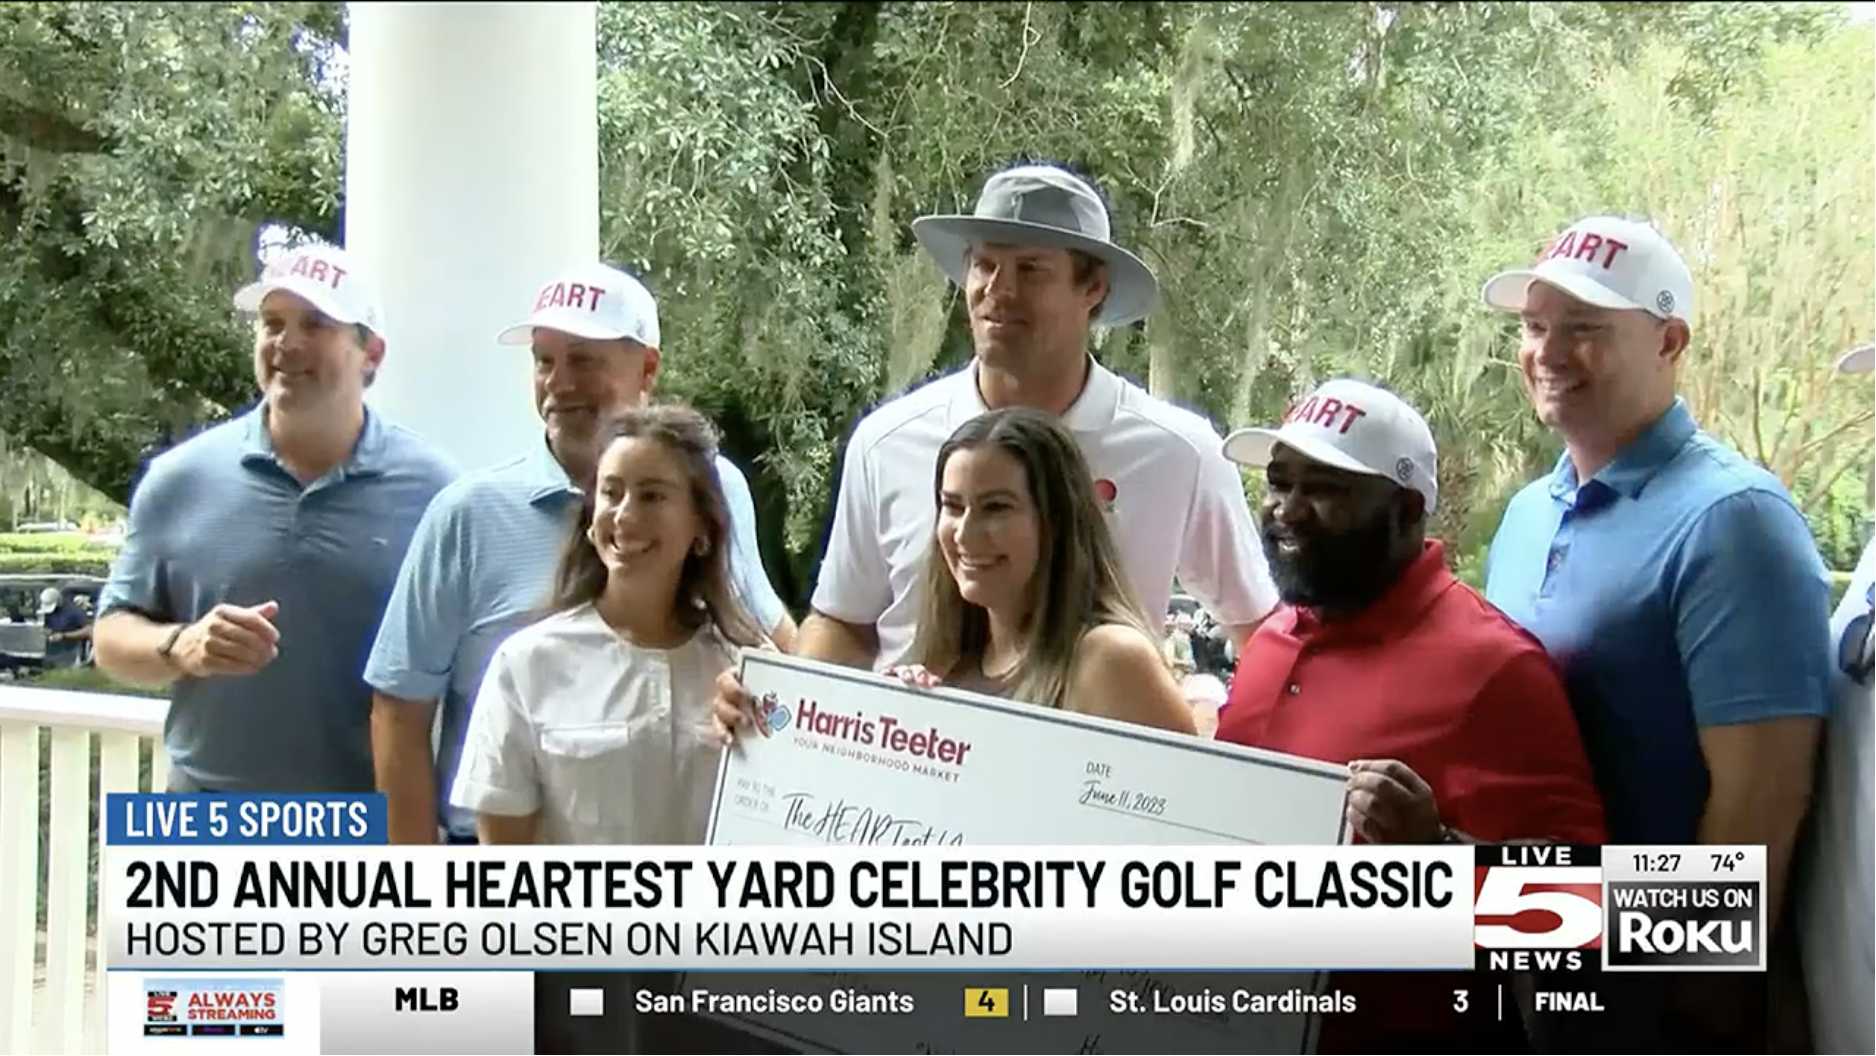 Greg Olsen hosts 2nd Annual HEARTest Yard Celebrity Golf Classic on Kiawah Island